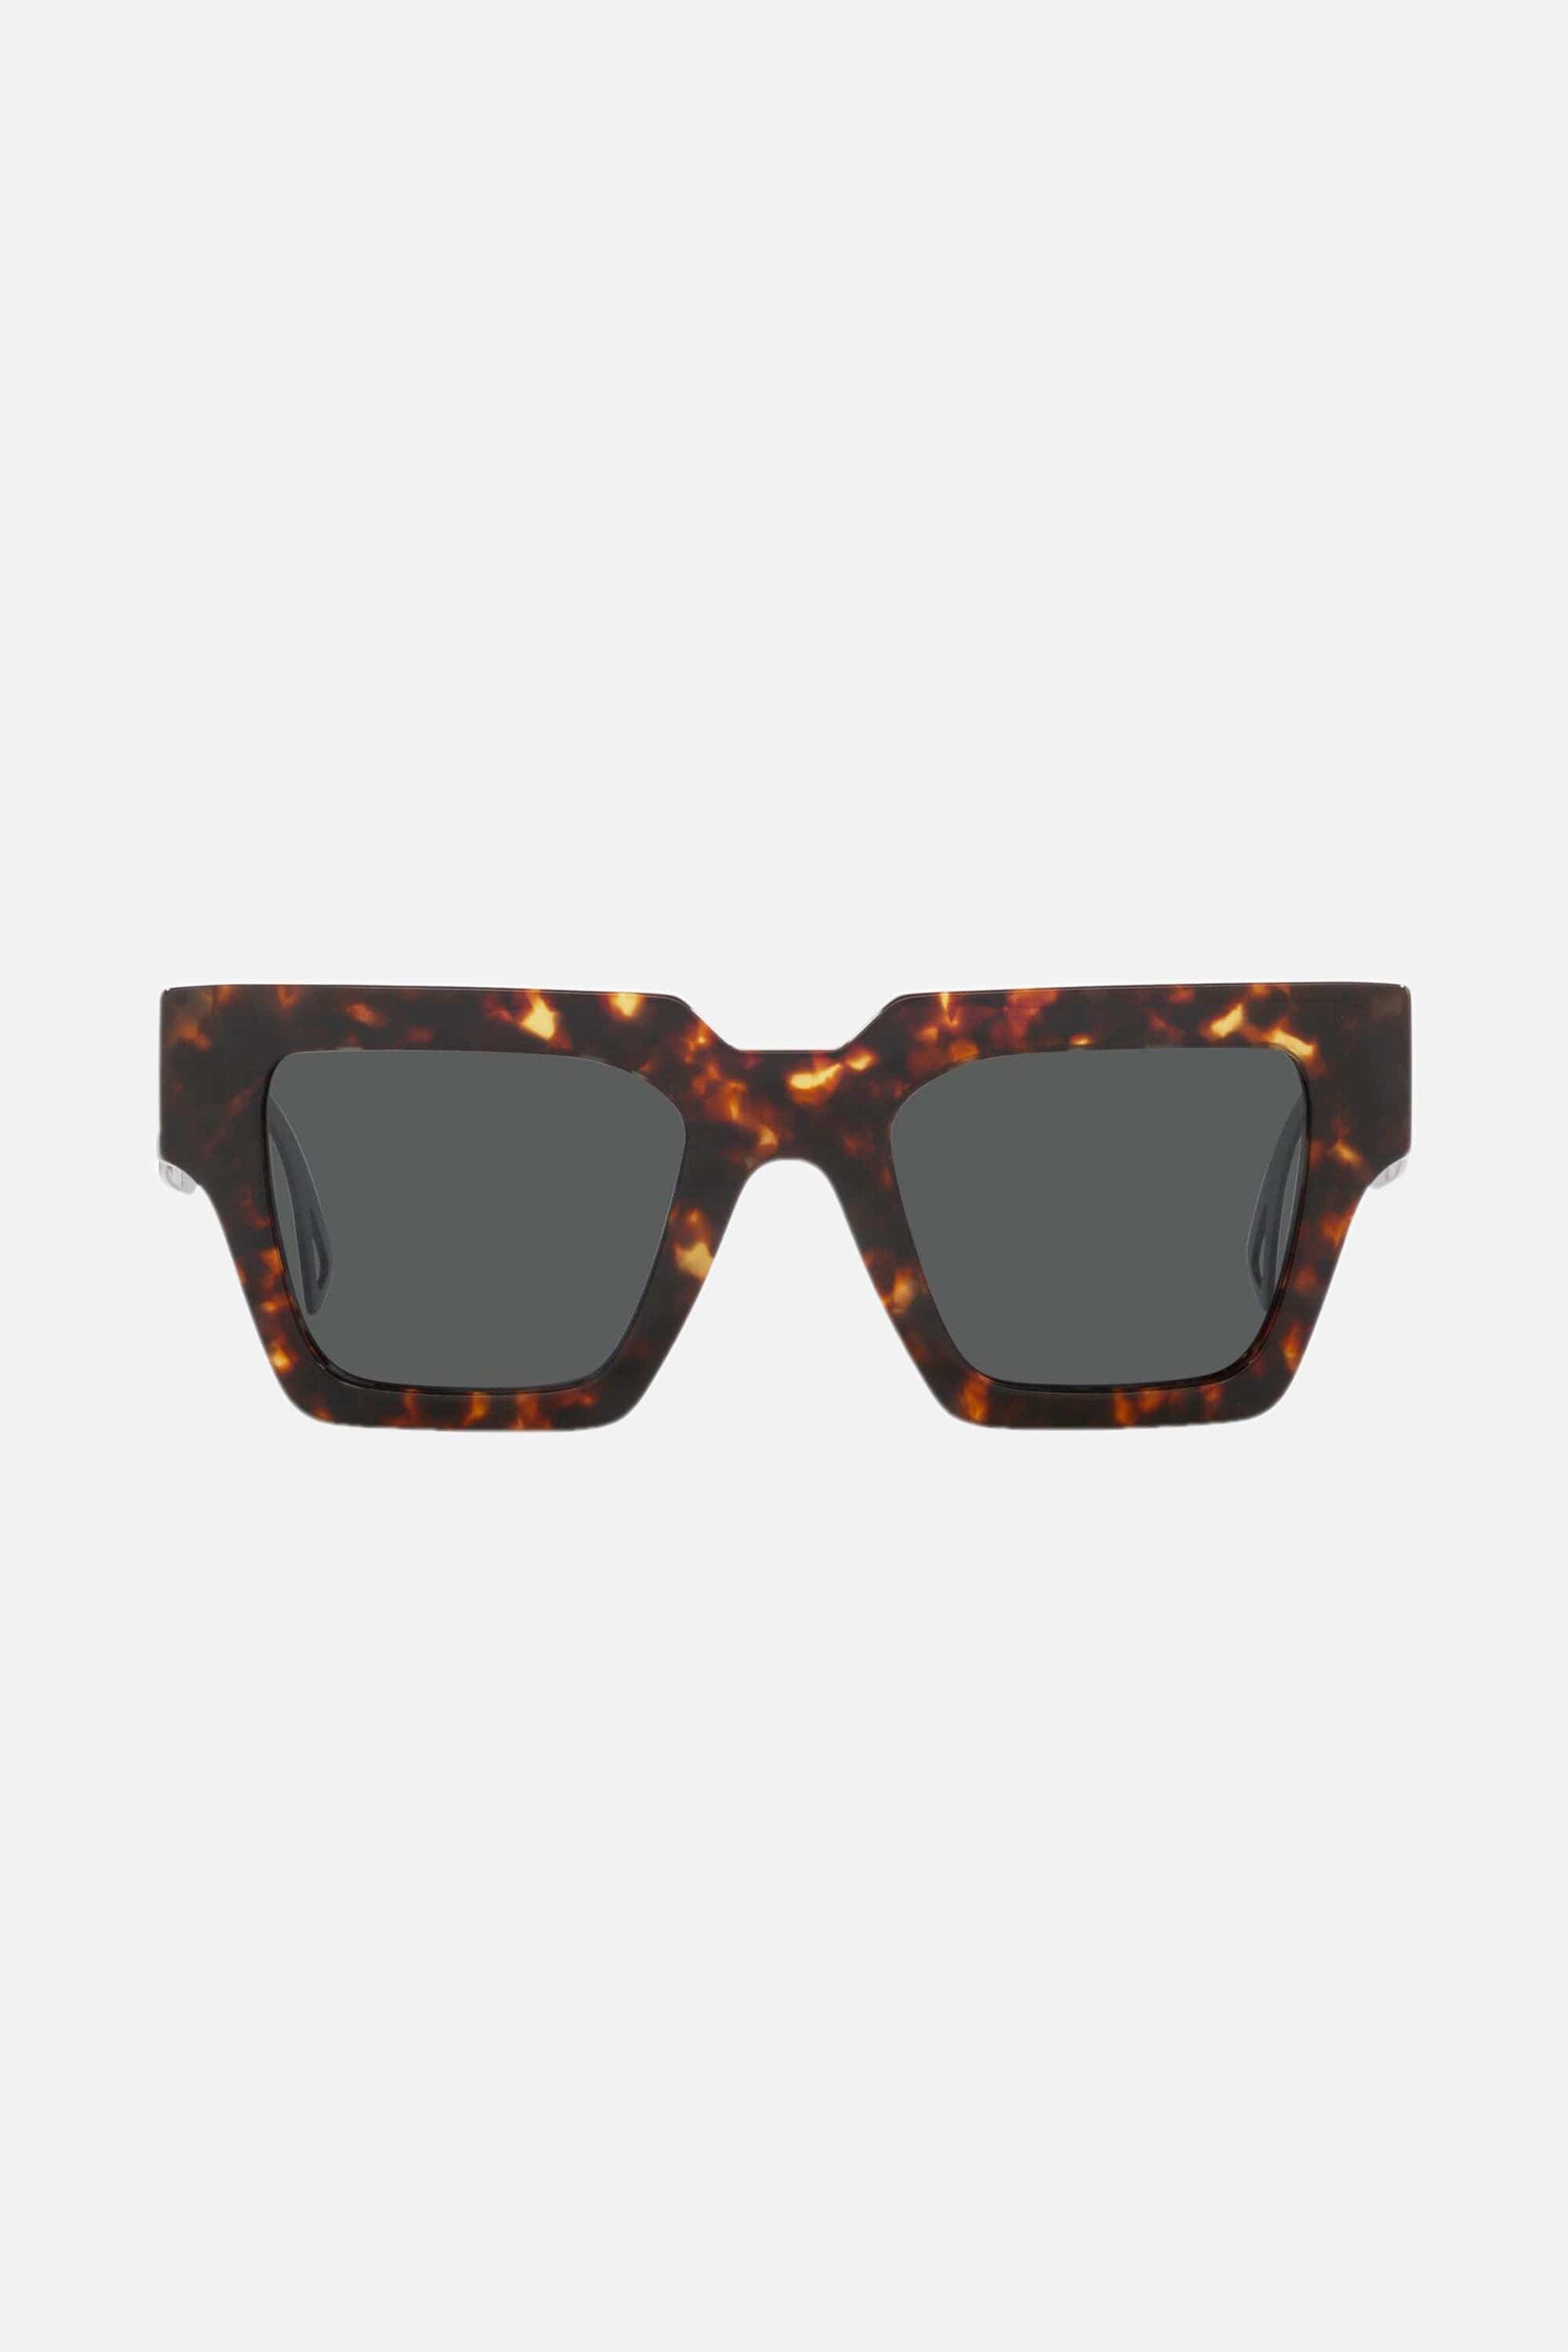 Versace squared combi acetate sunglasses - Eyewear Club